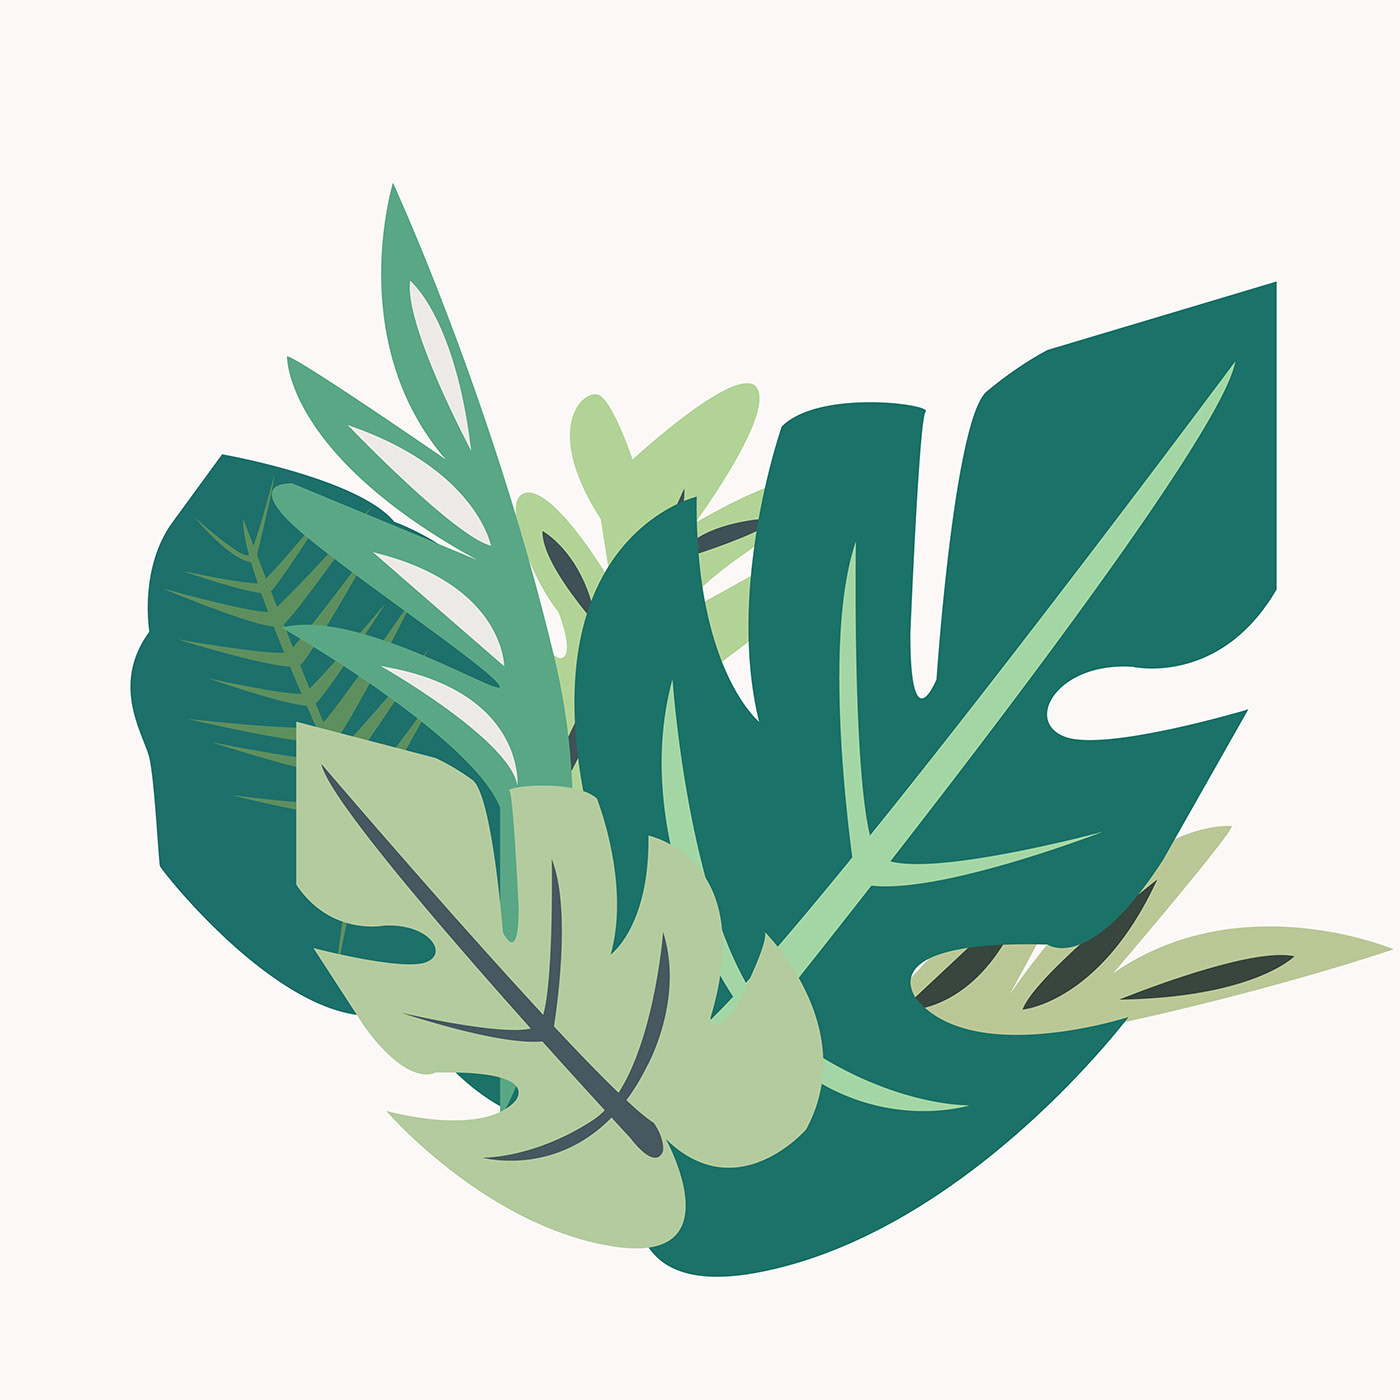 Monochromic Plant Leaves illustration